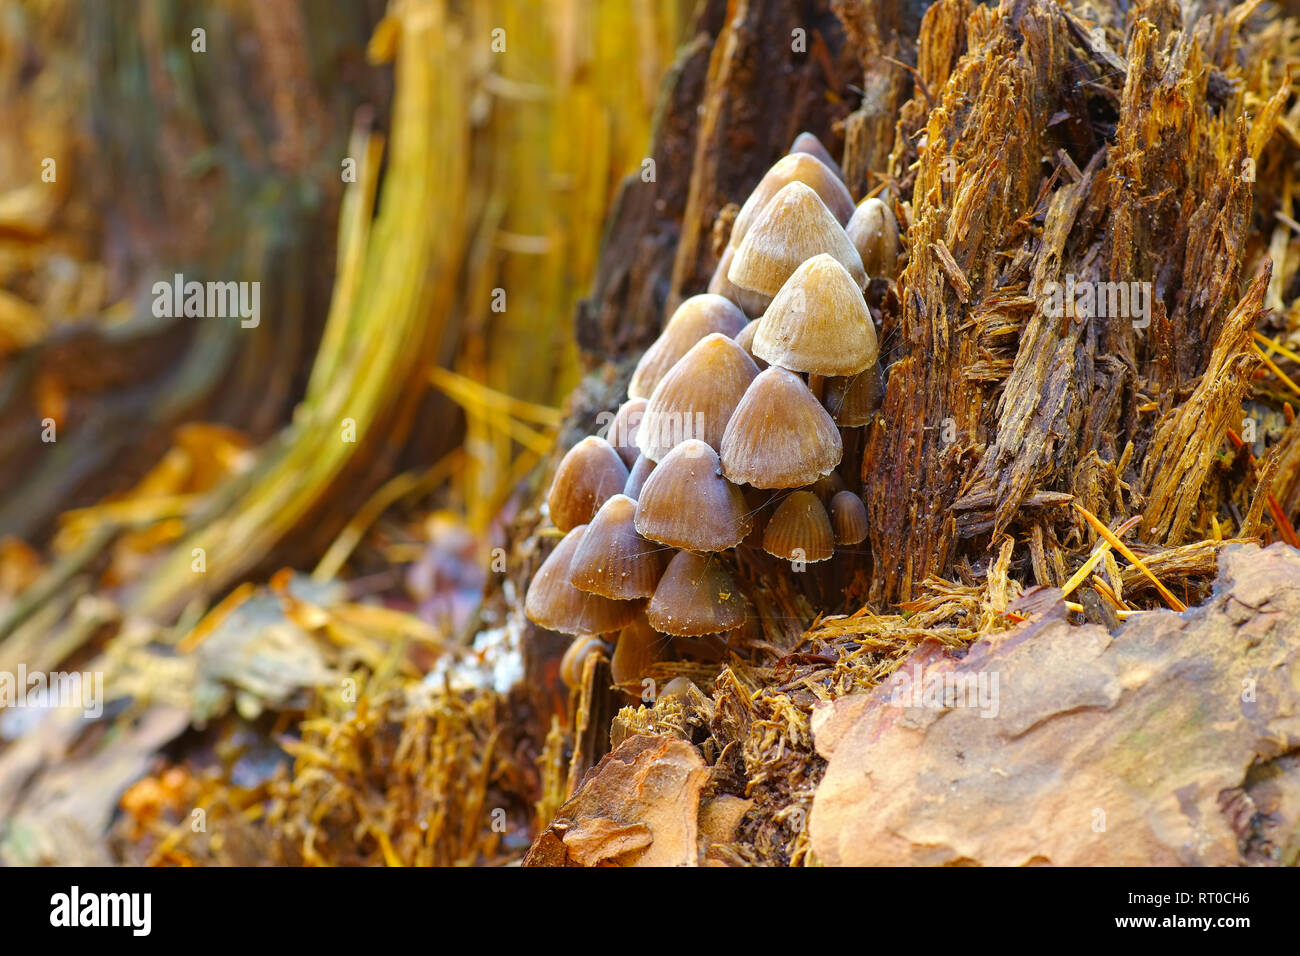 fairy inkcap or Coprinellus disseminatus in autumn forest Stock Photo